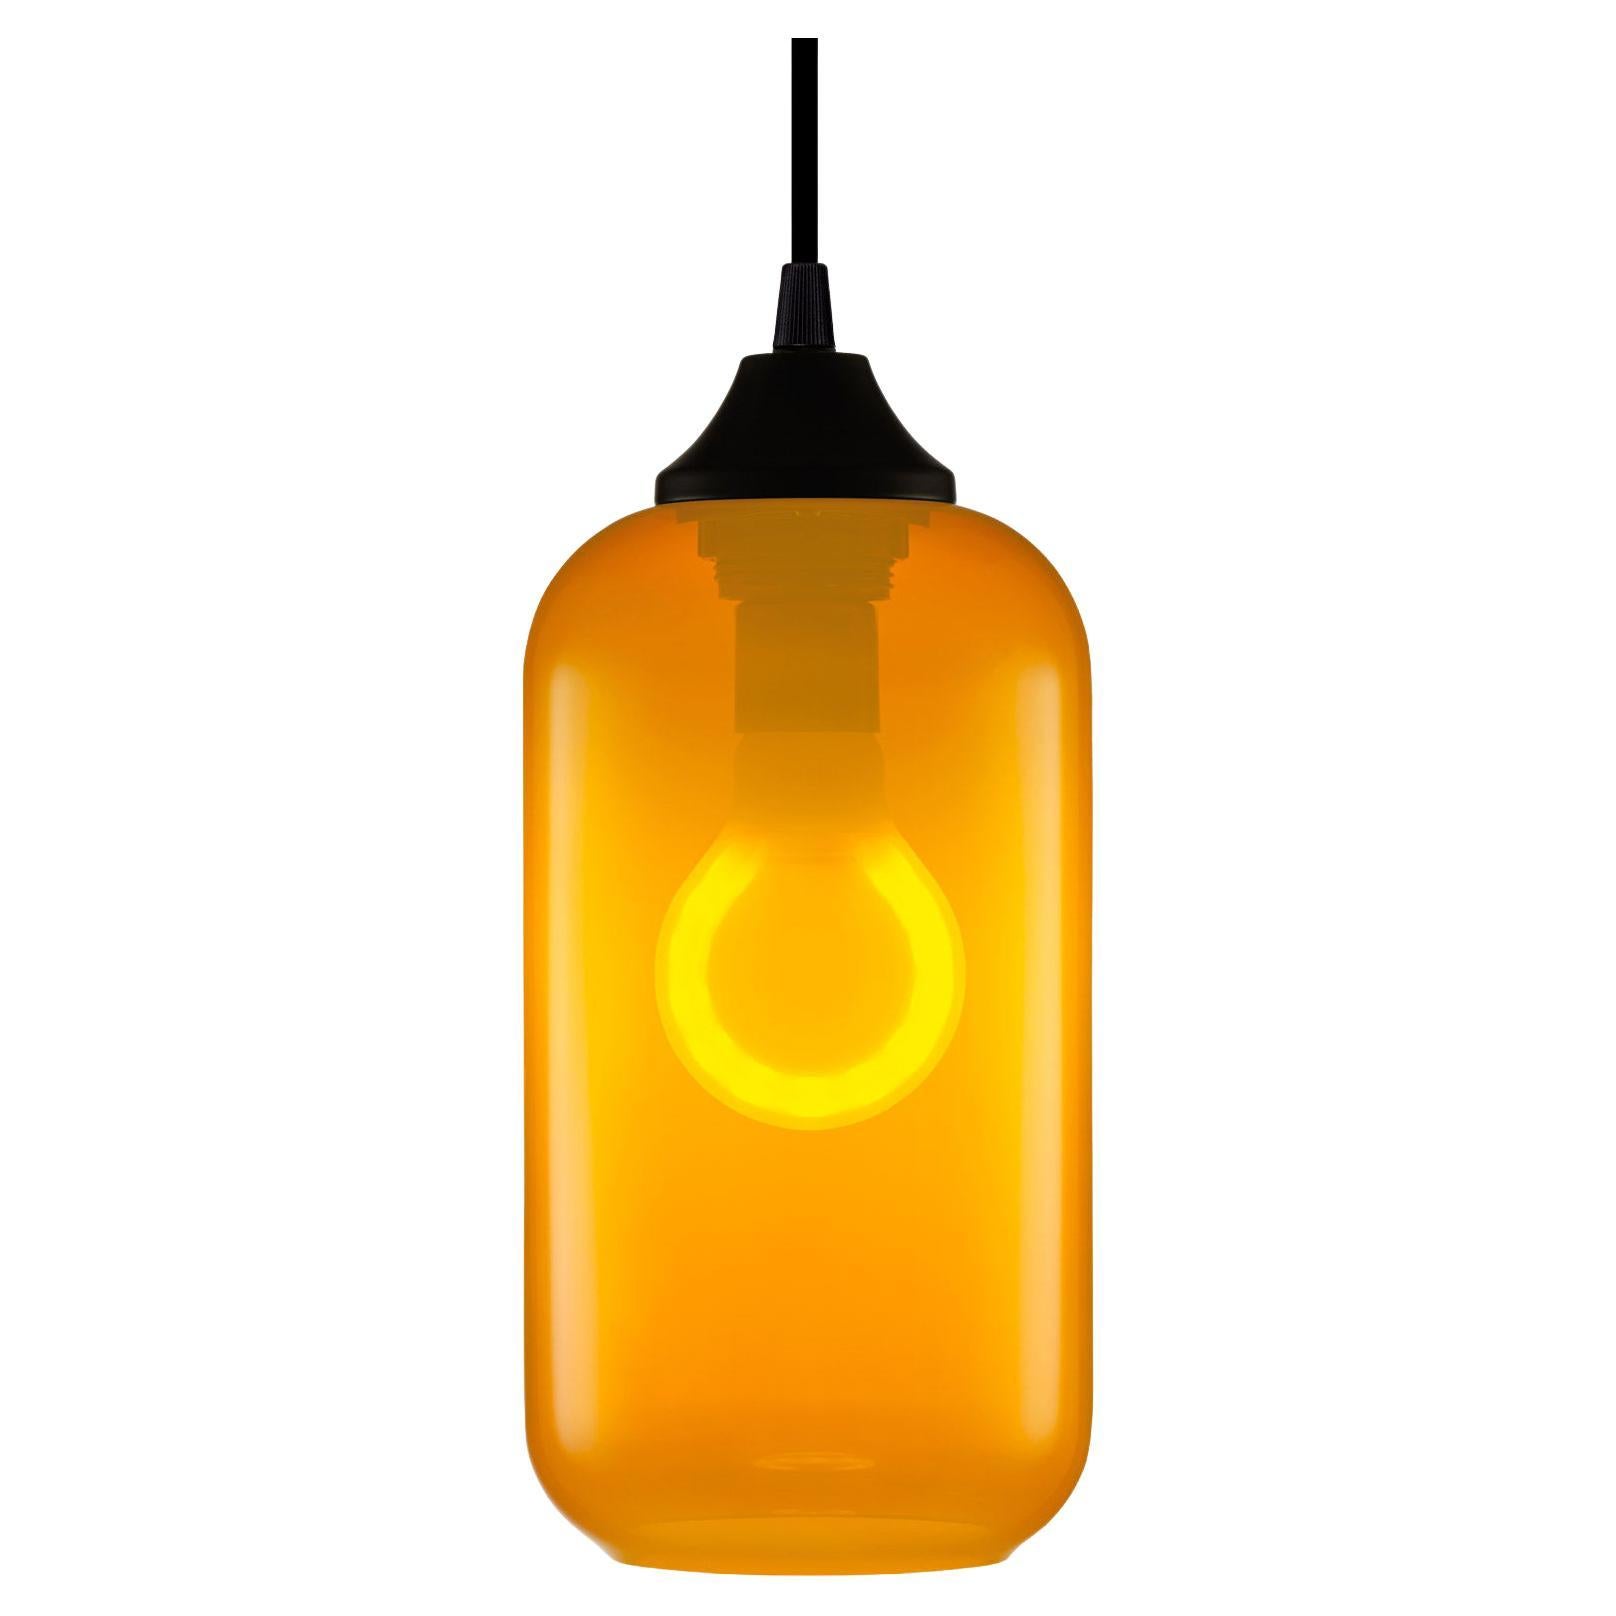 Lámpara Colgante Helio Chroma Tangerine de Vidrio Soplado a Mano, Fabricada en EE.UU.